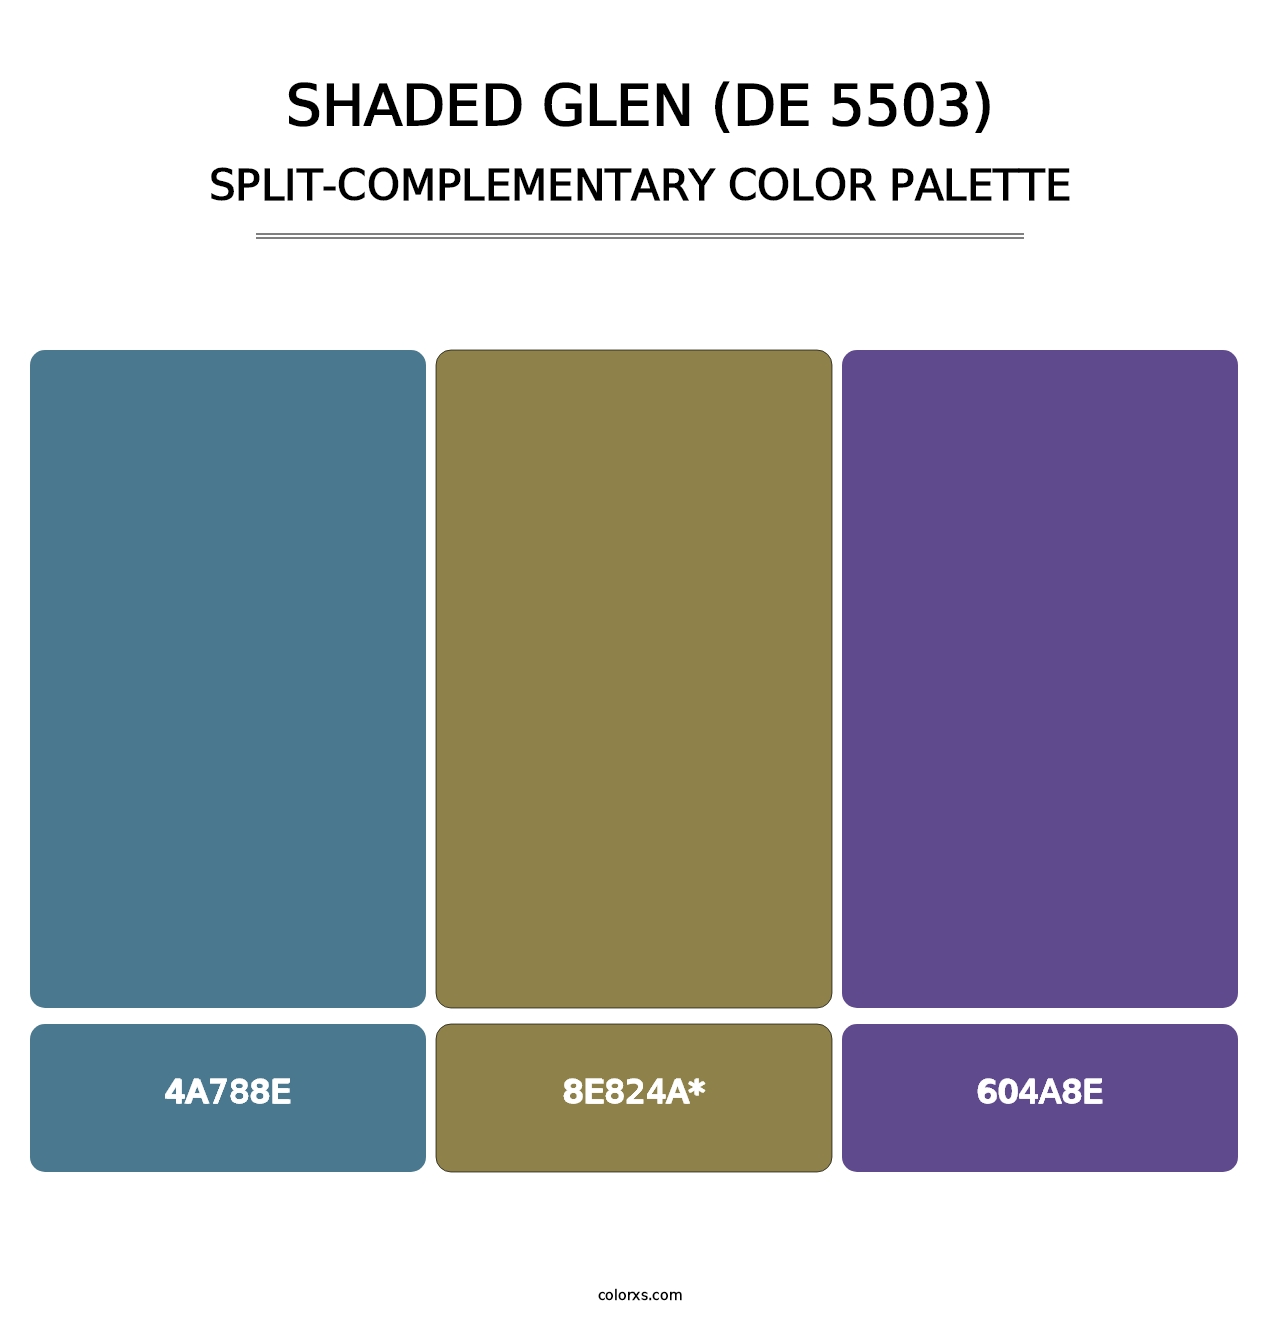 Shaded Glen (DE 5503) - Split-Complementary Color Palette